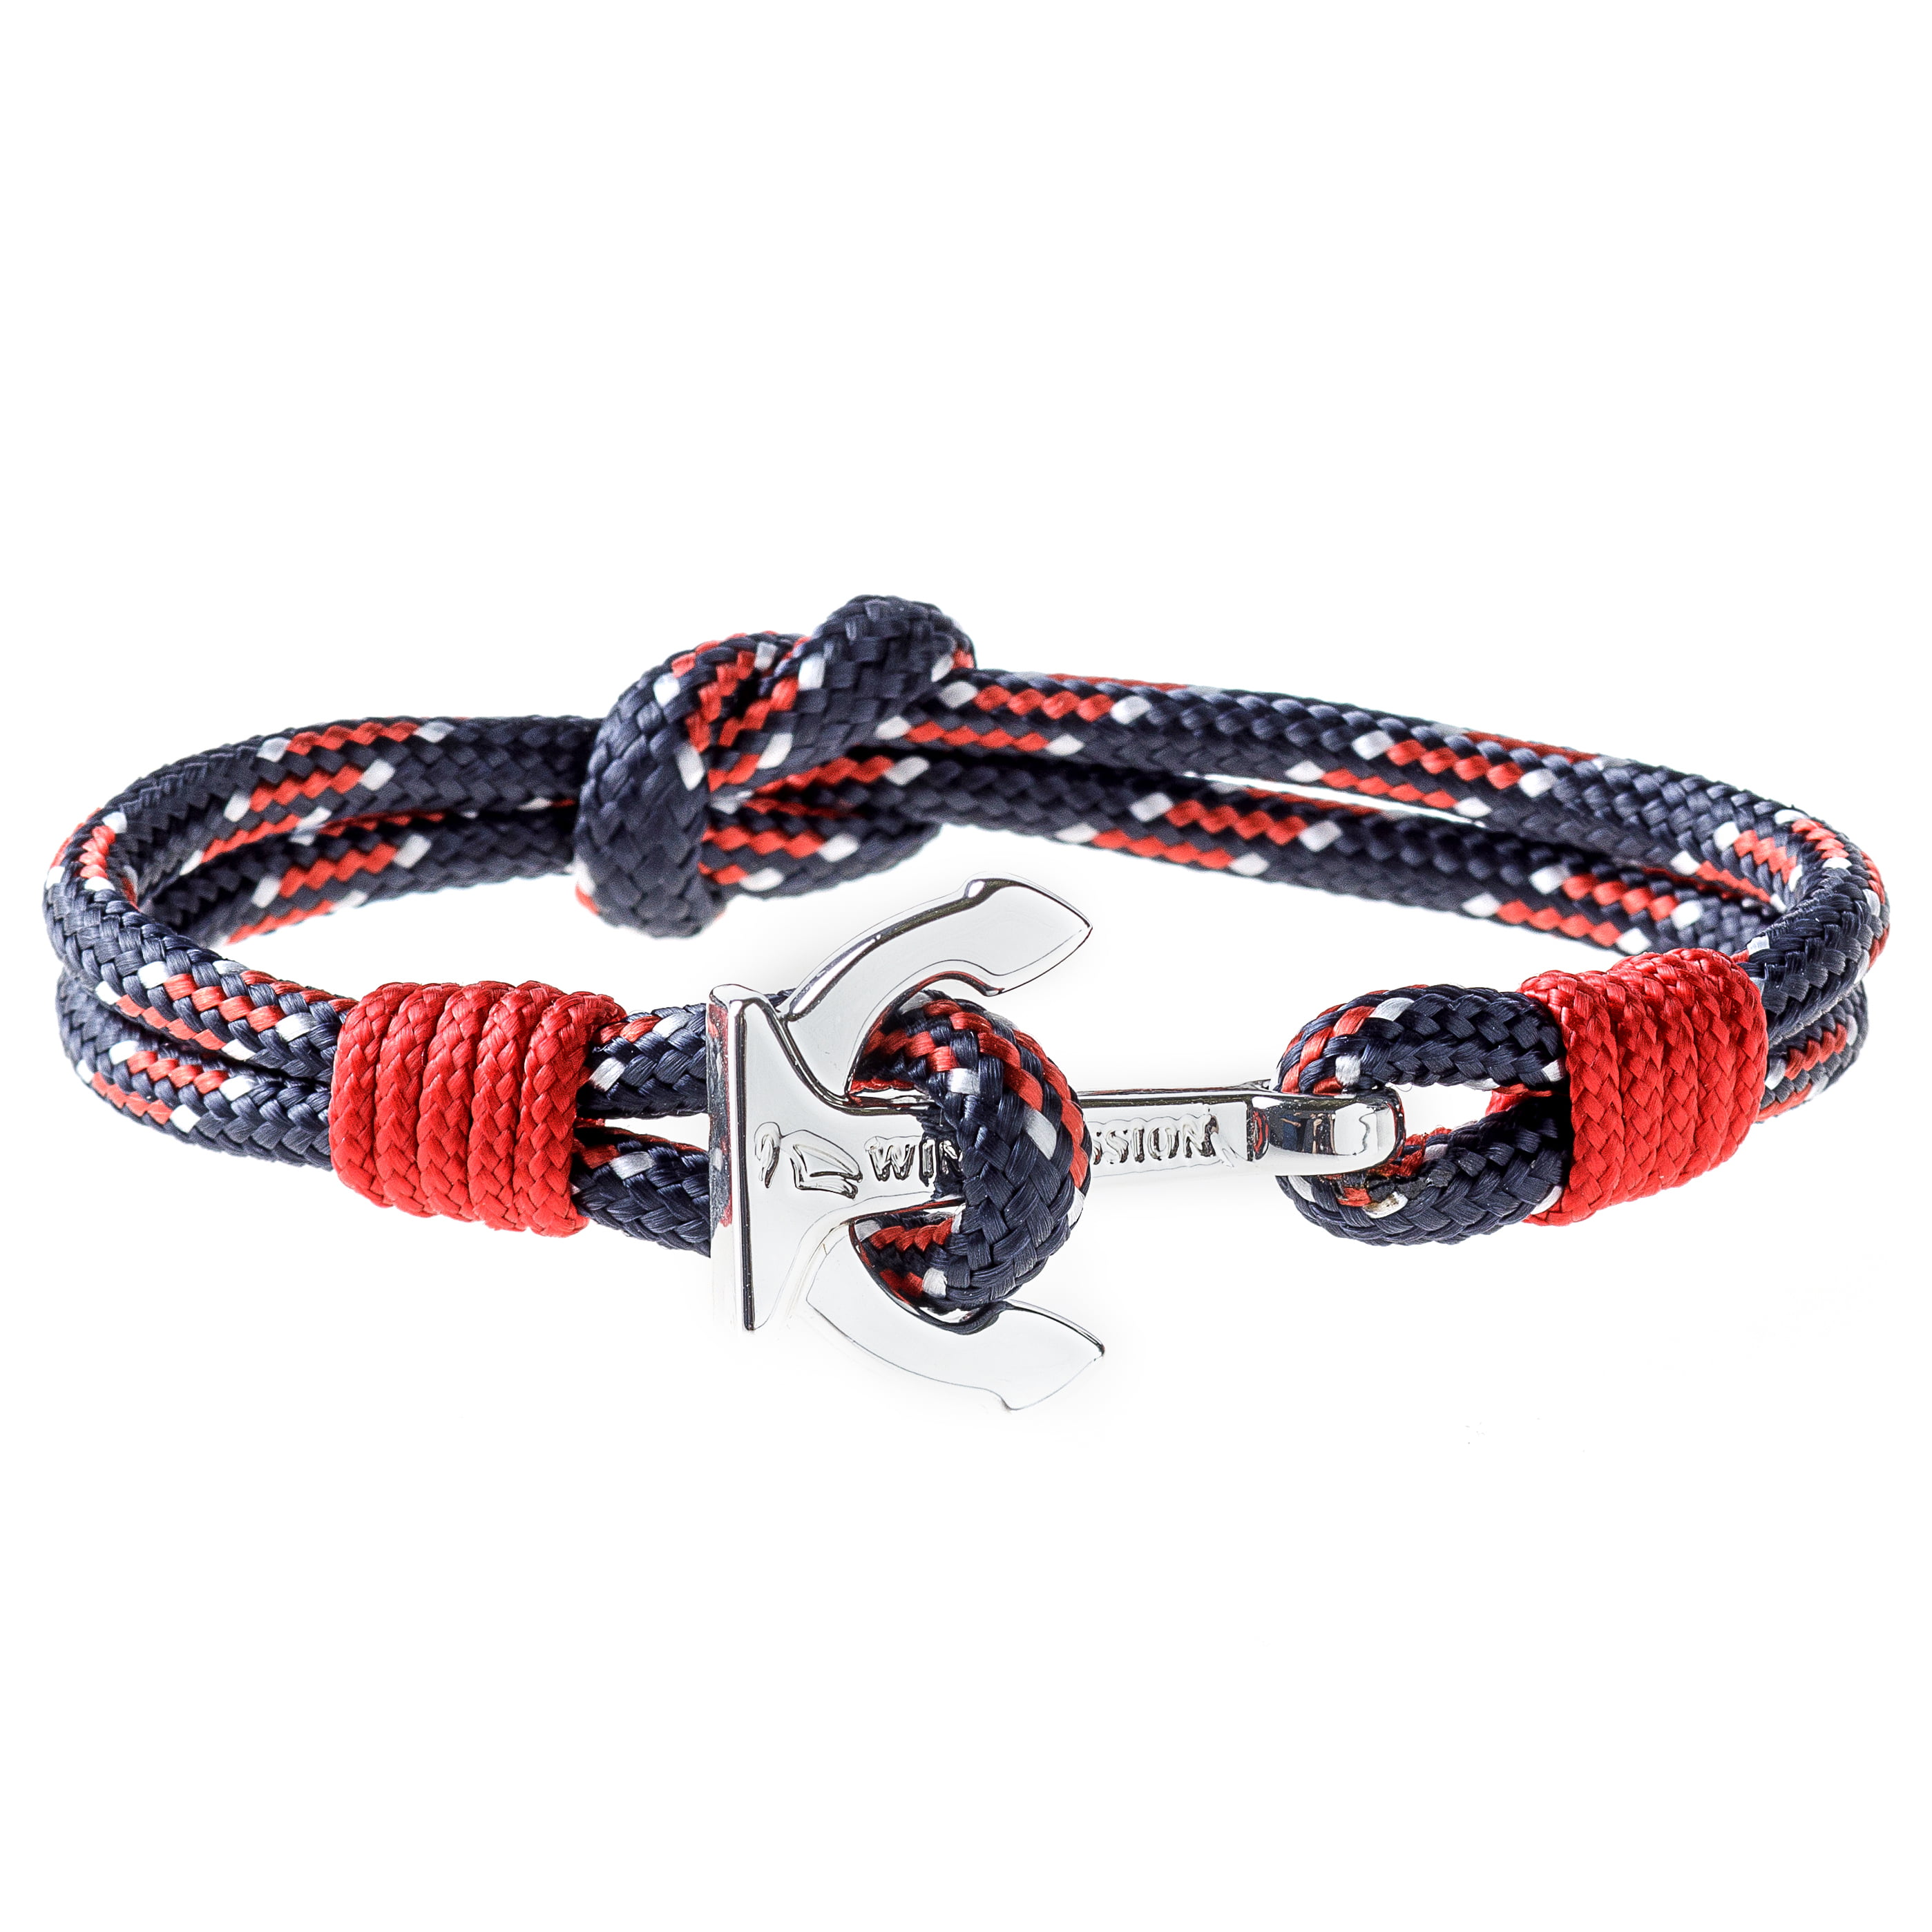 Wind Passion Premium Anchor Bracelet Durable Nautical Rope Cuff Wristband for Men Women 